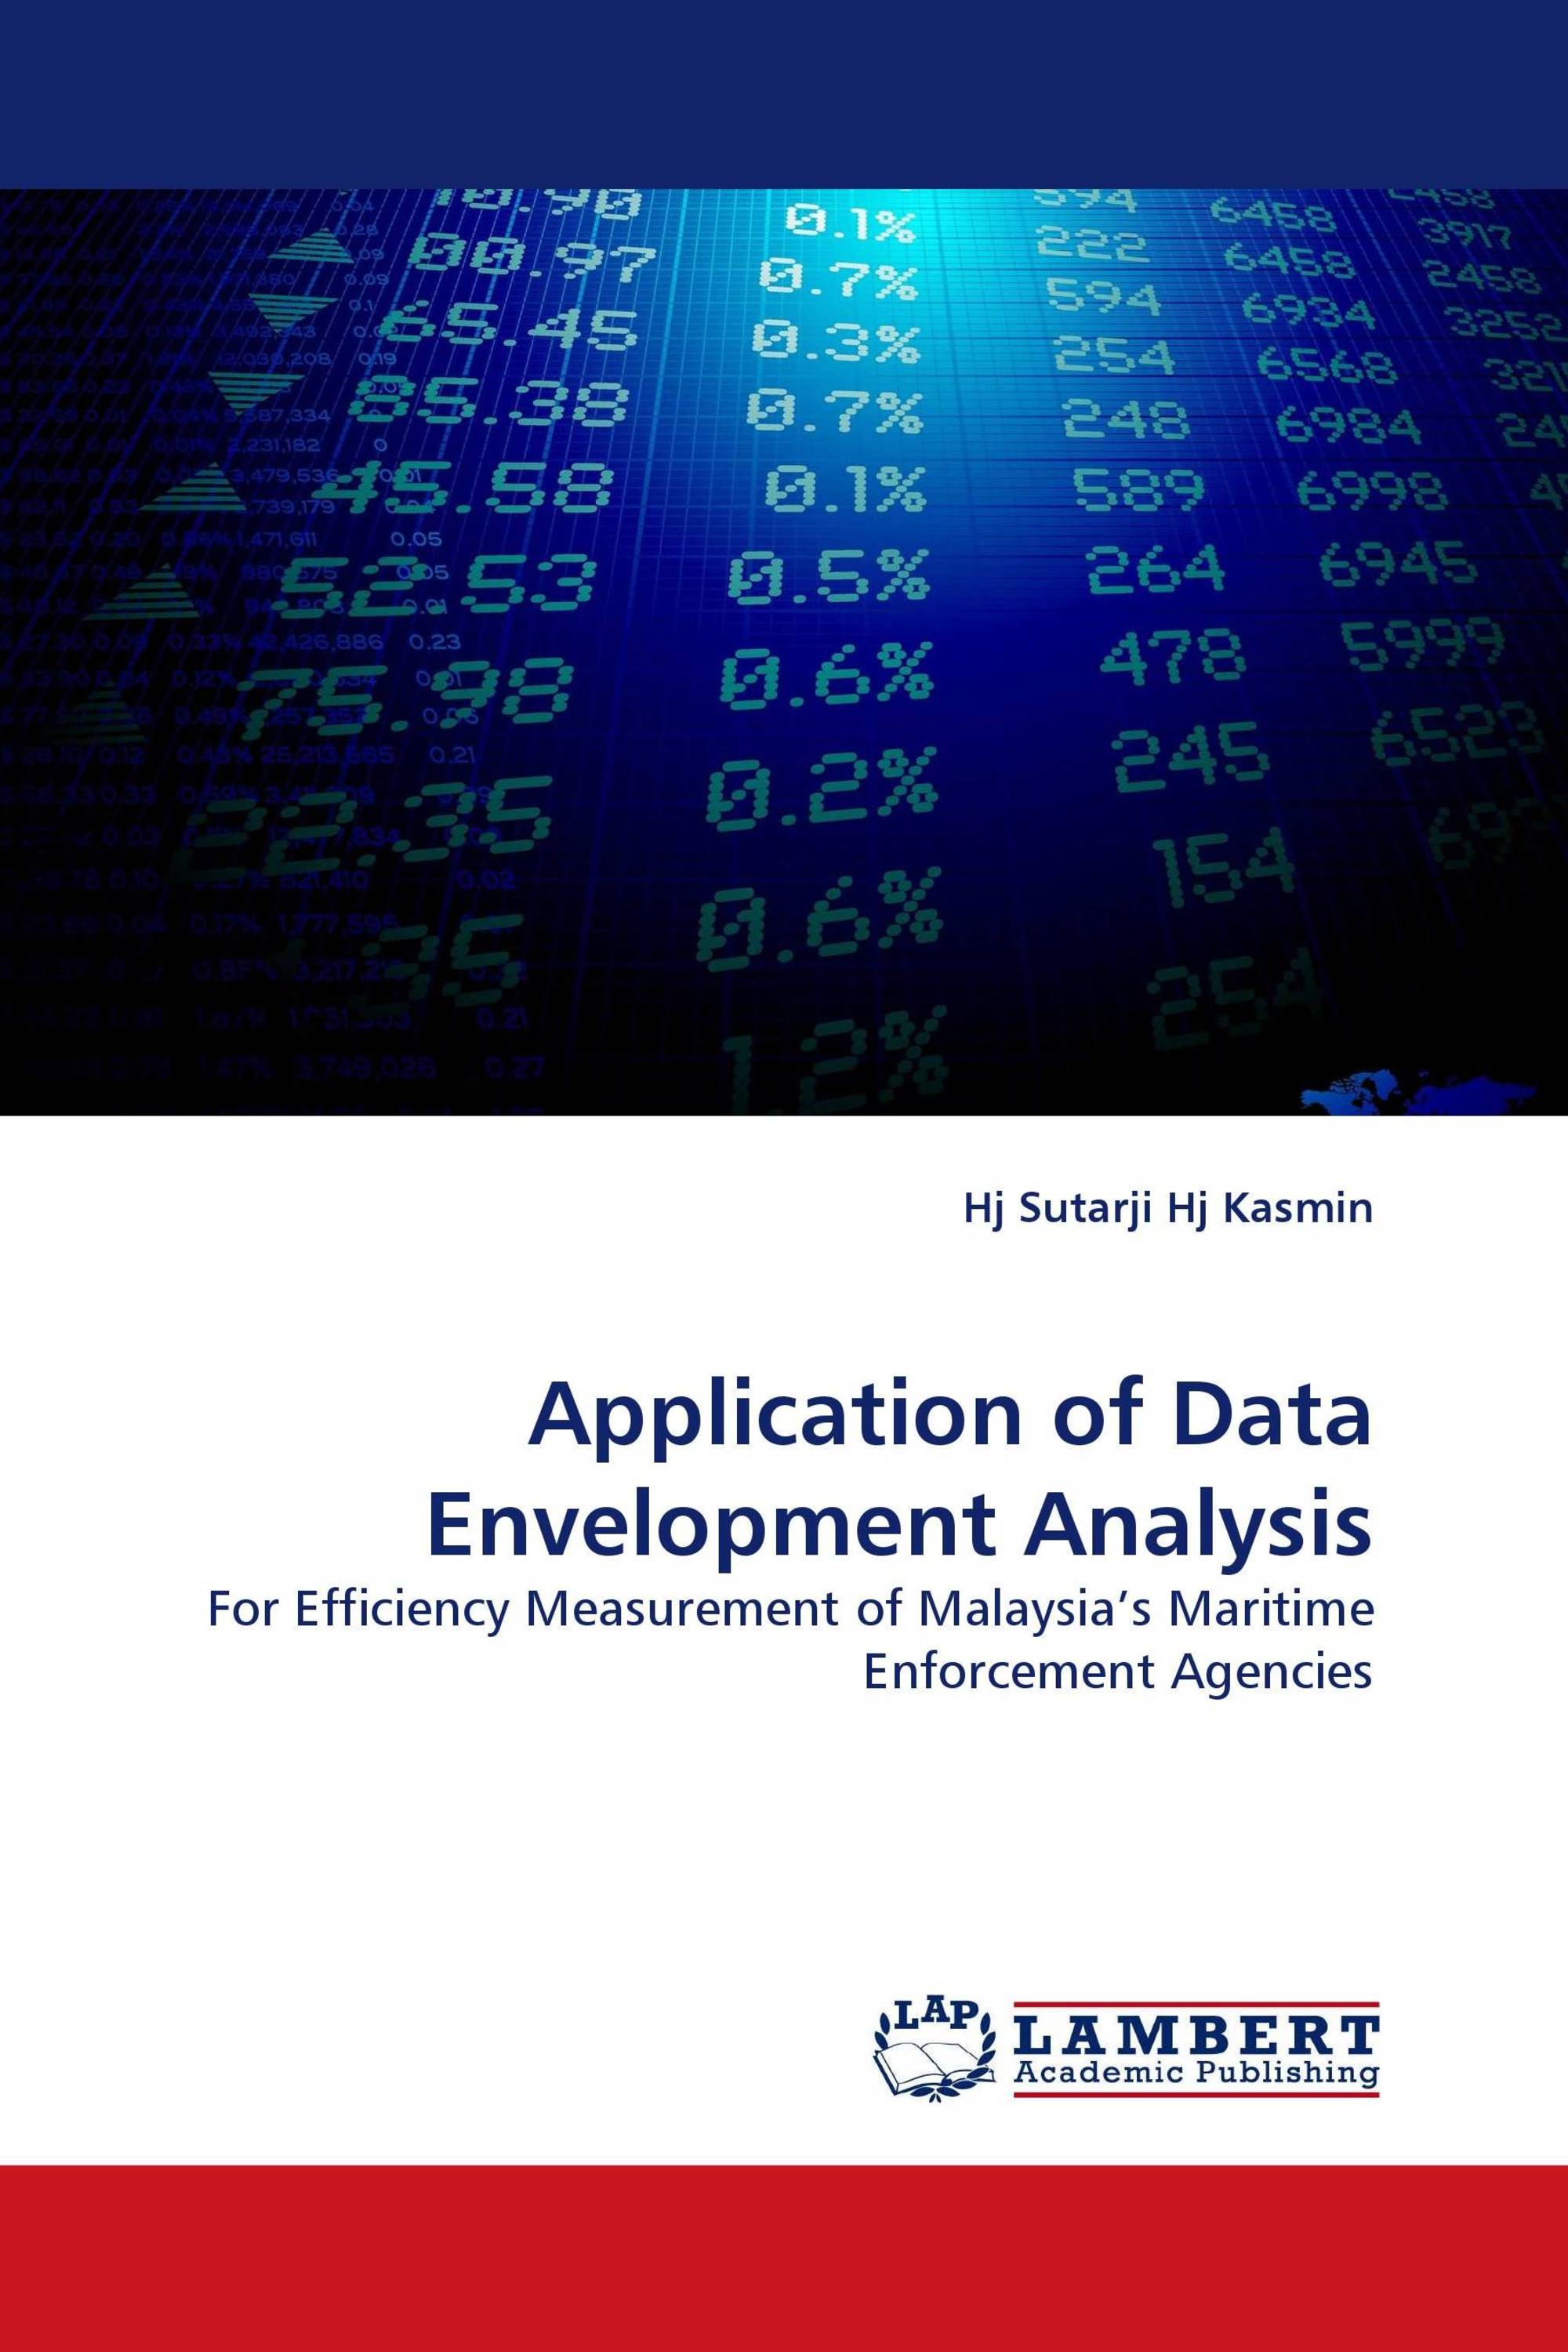 data envelopment analysis excel